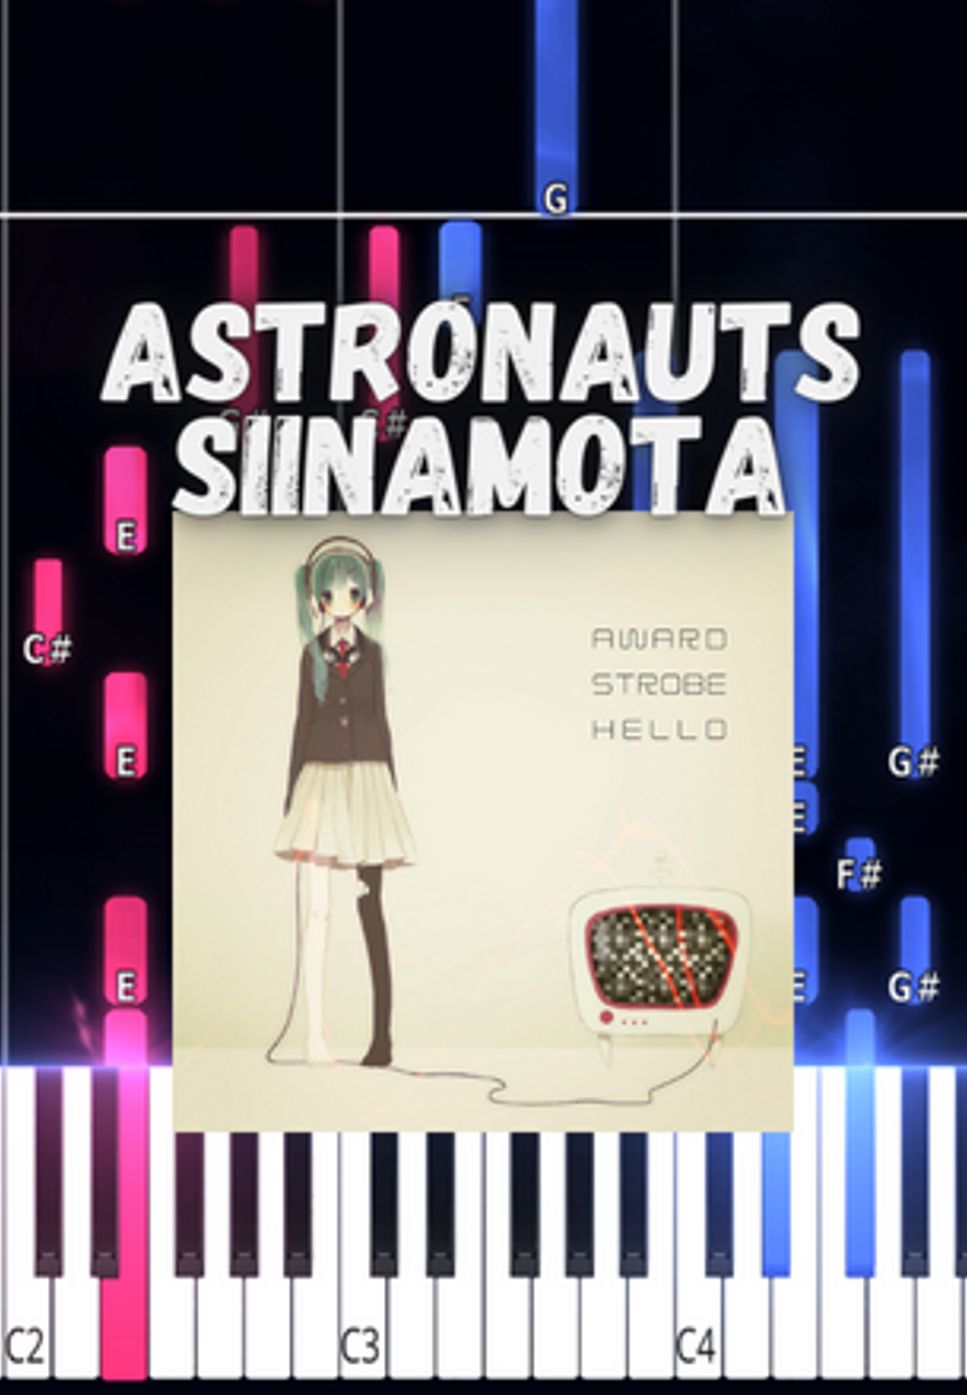 Siinamota - Astronauts (Piano ver. / easy ver. / siinamota) by Marco D.